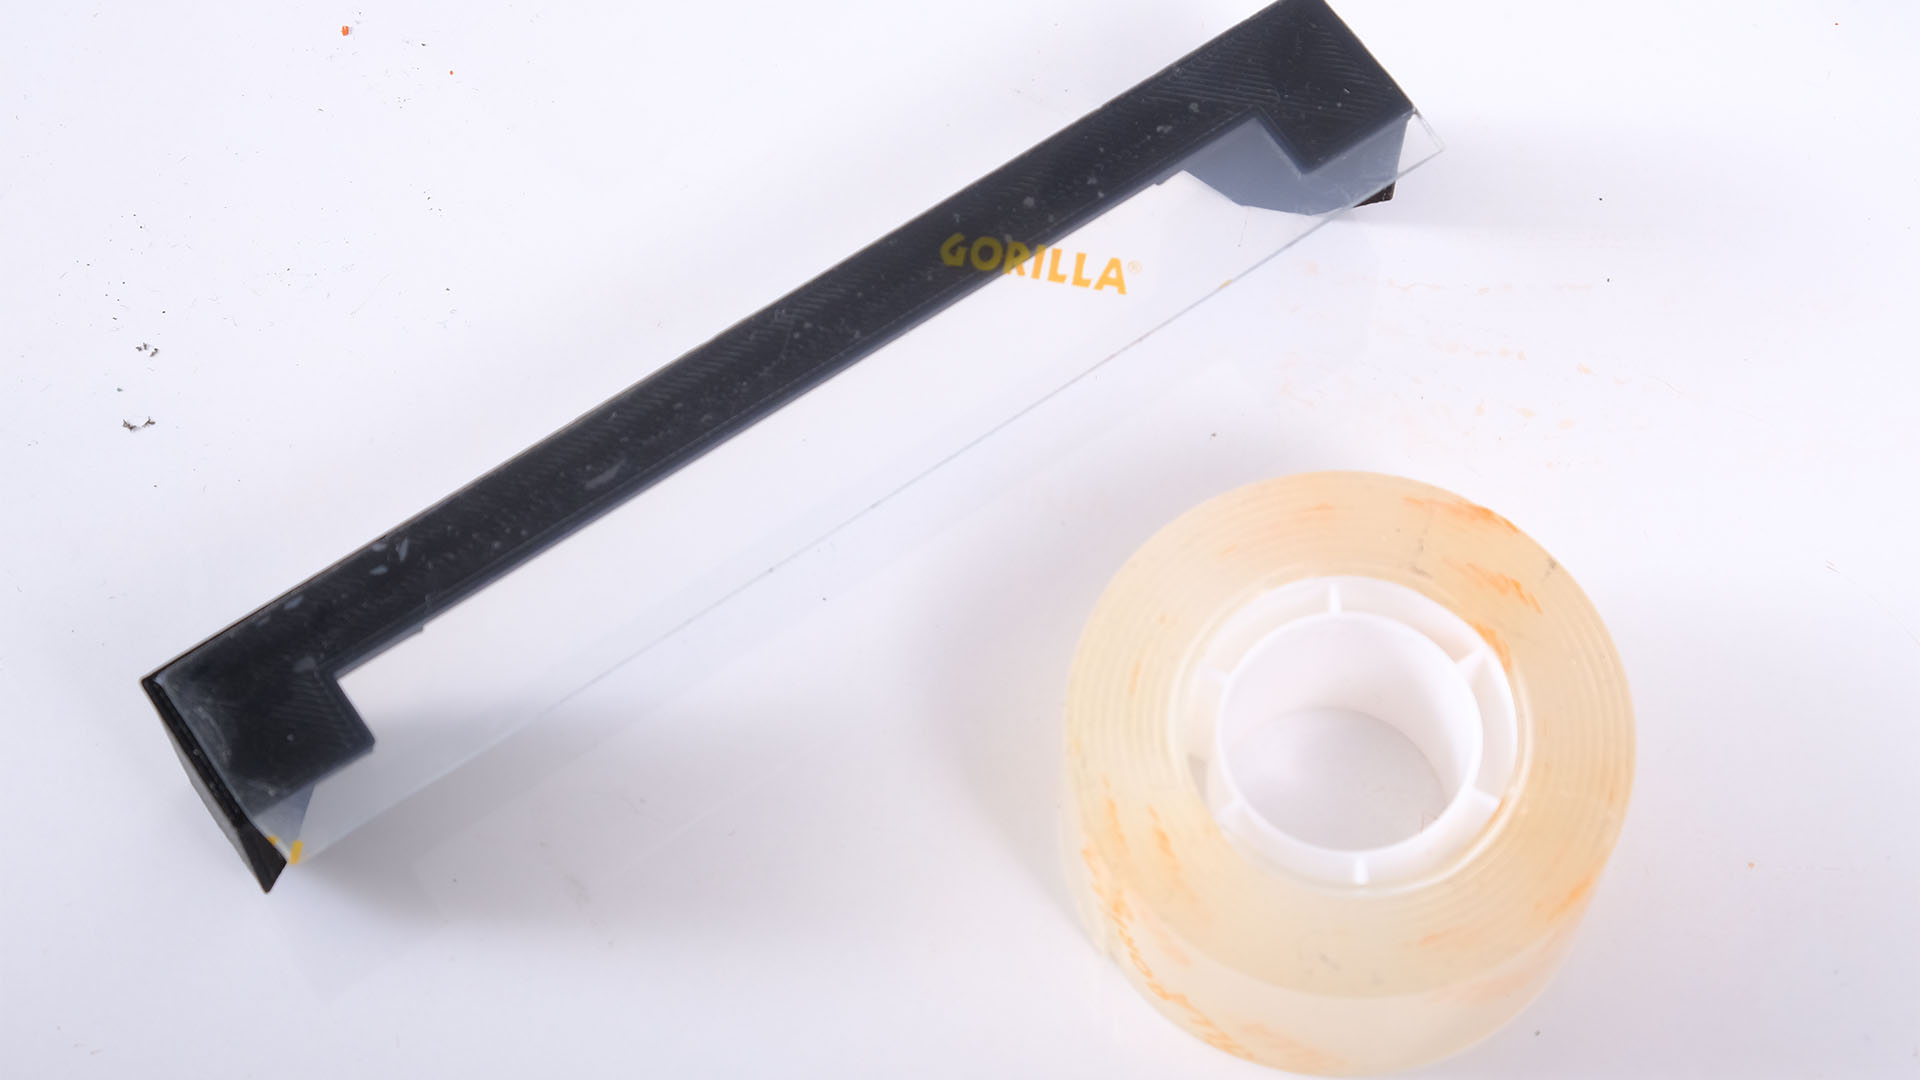 3D print case feet: apply mounting tape